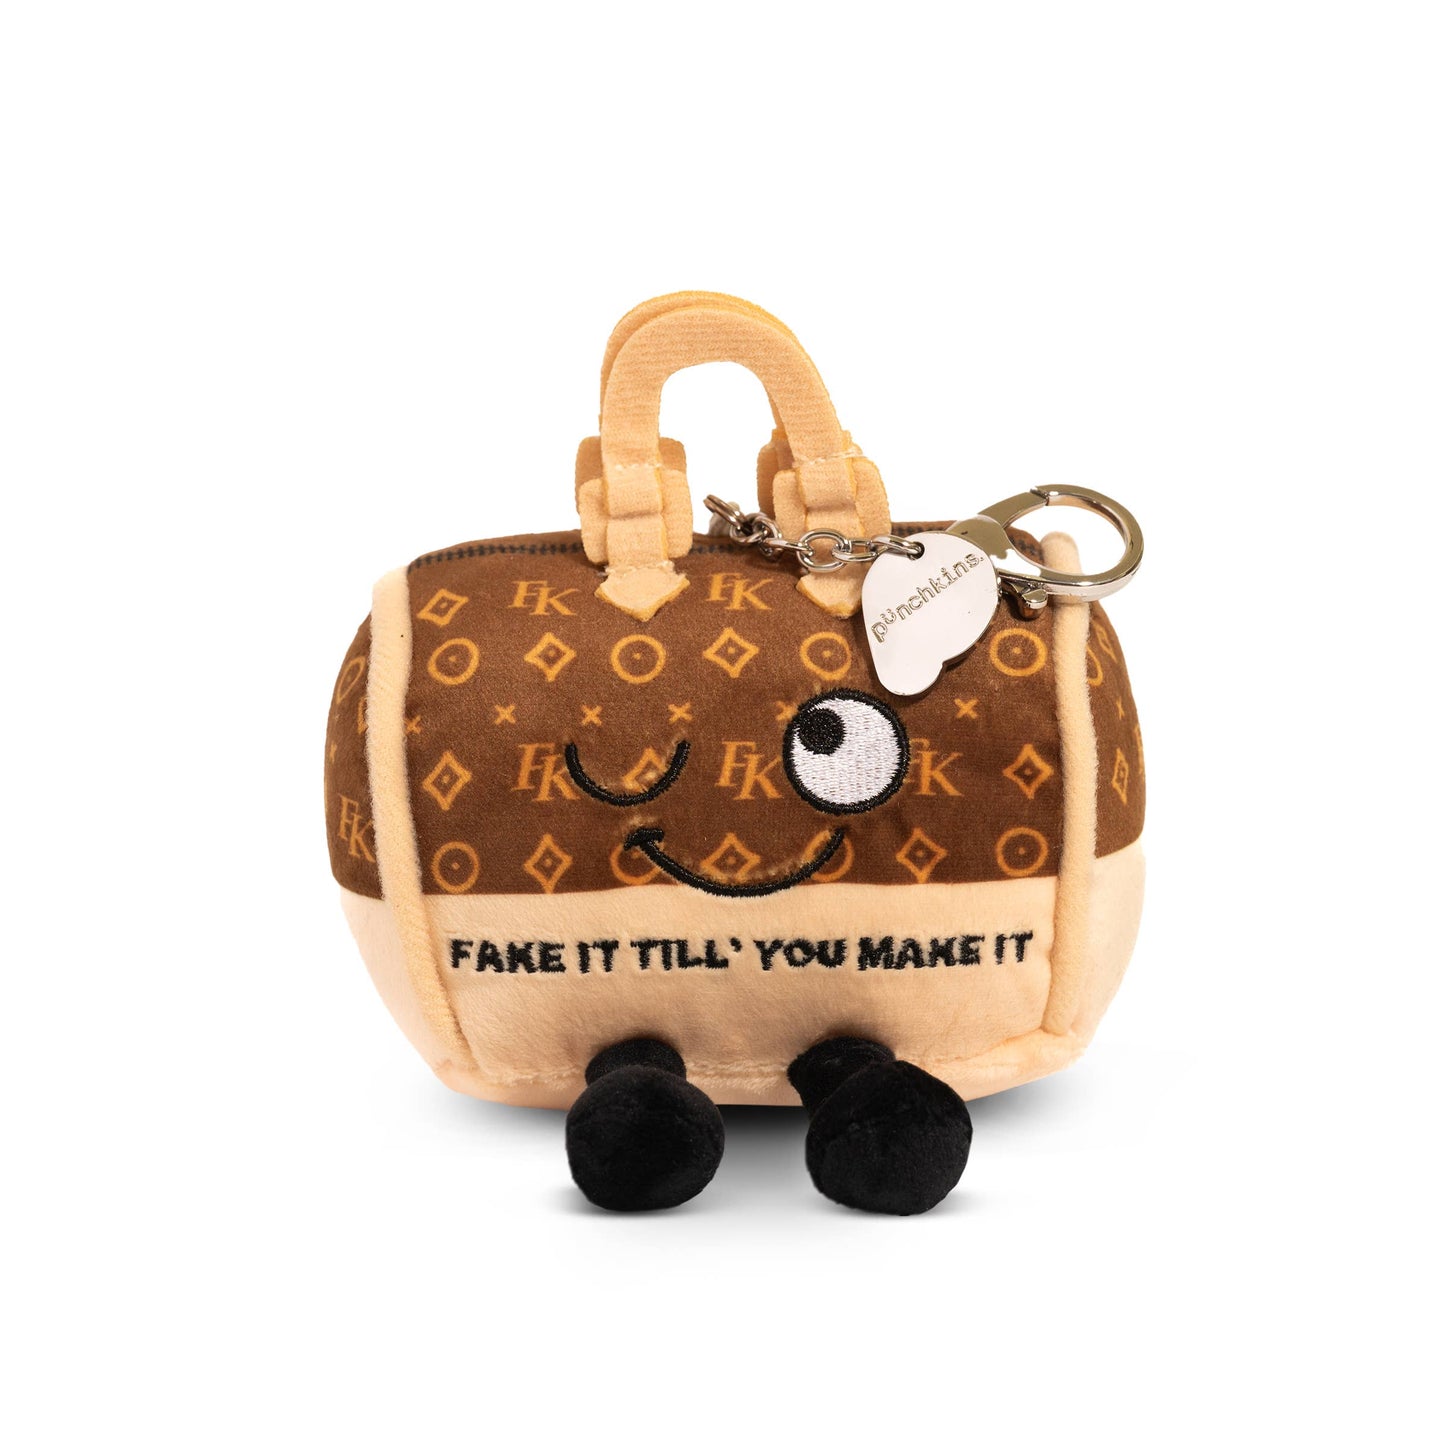 "Fake it" Bag Charm Keychain